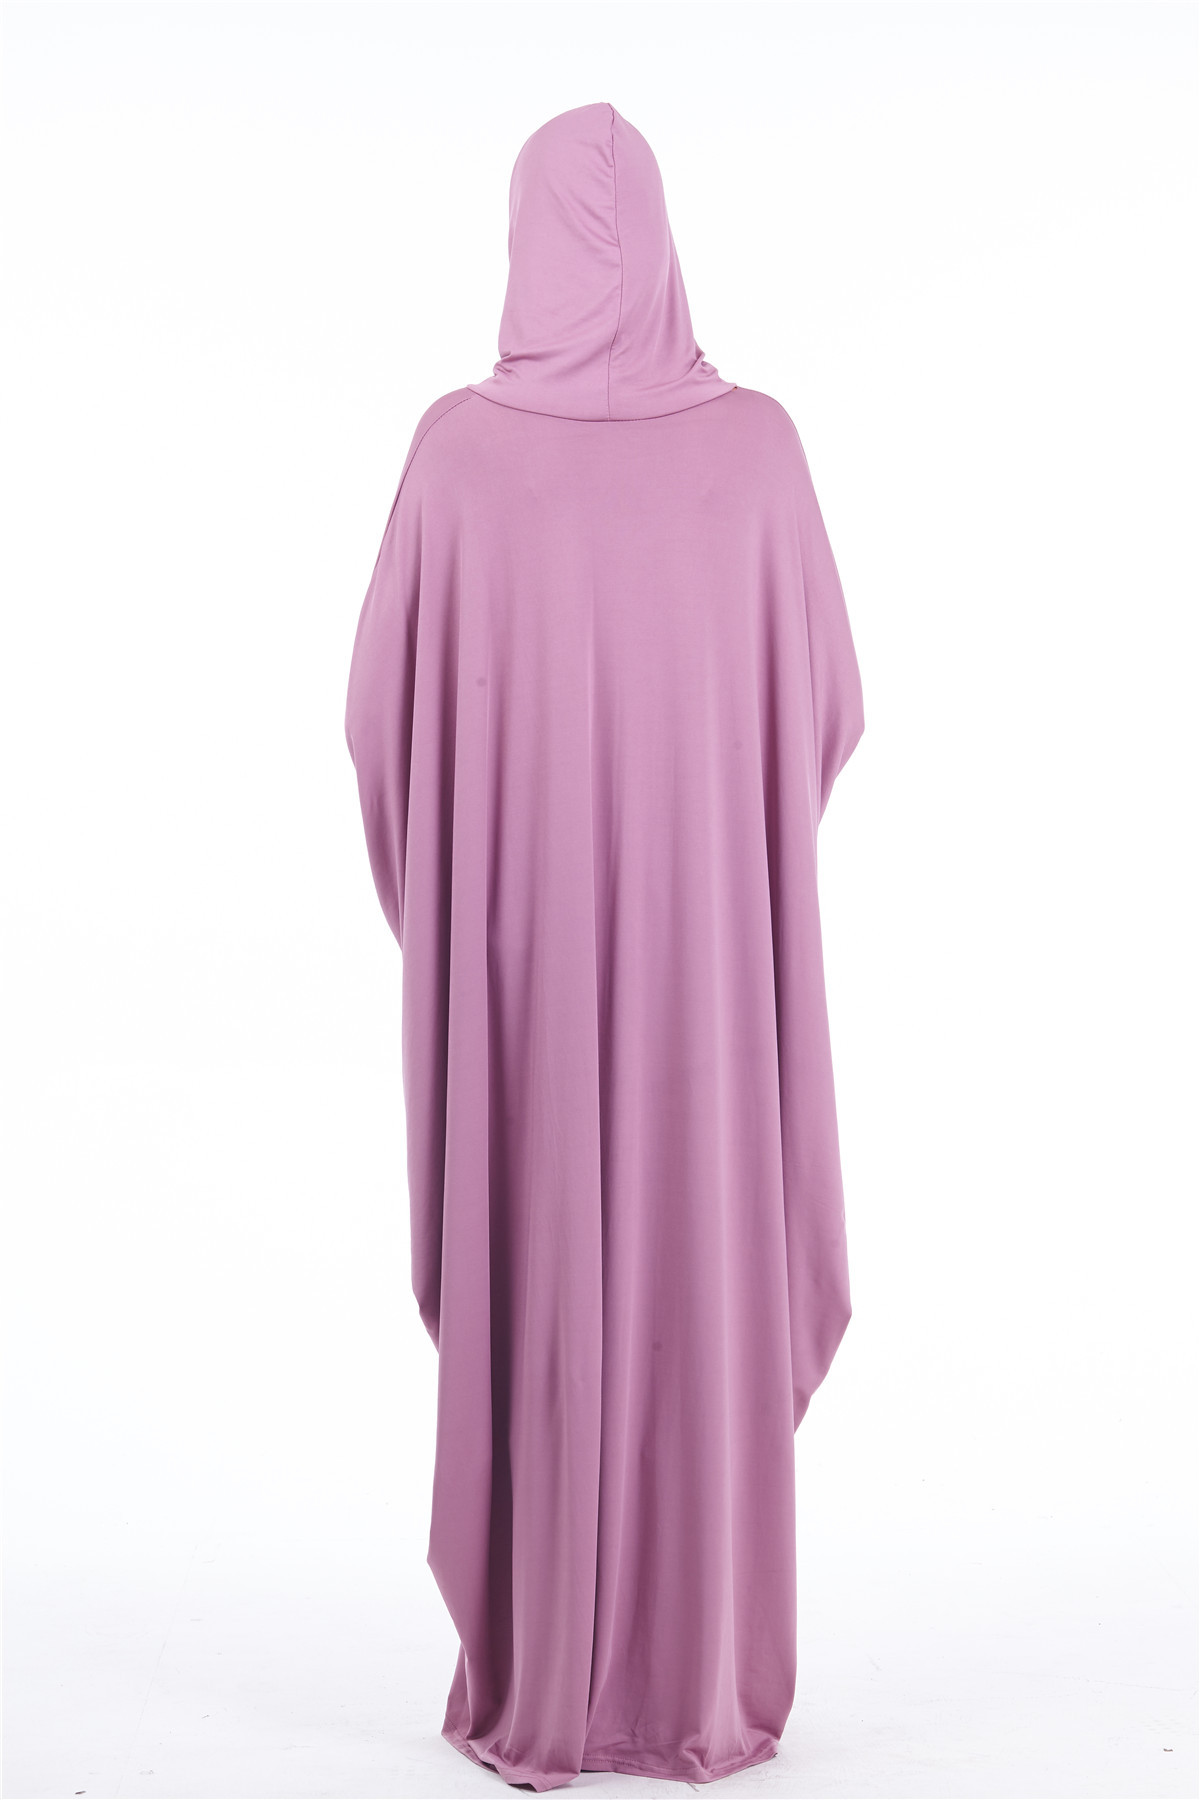 Ramadan Islamic Clothing Prayer Dress Women Formal Muslim Garment